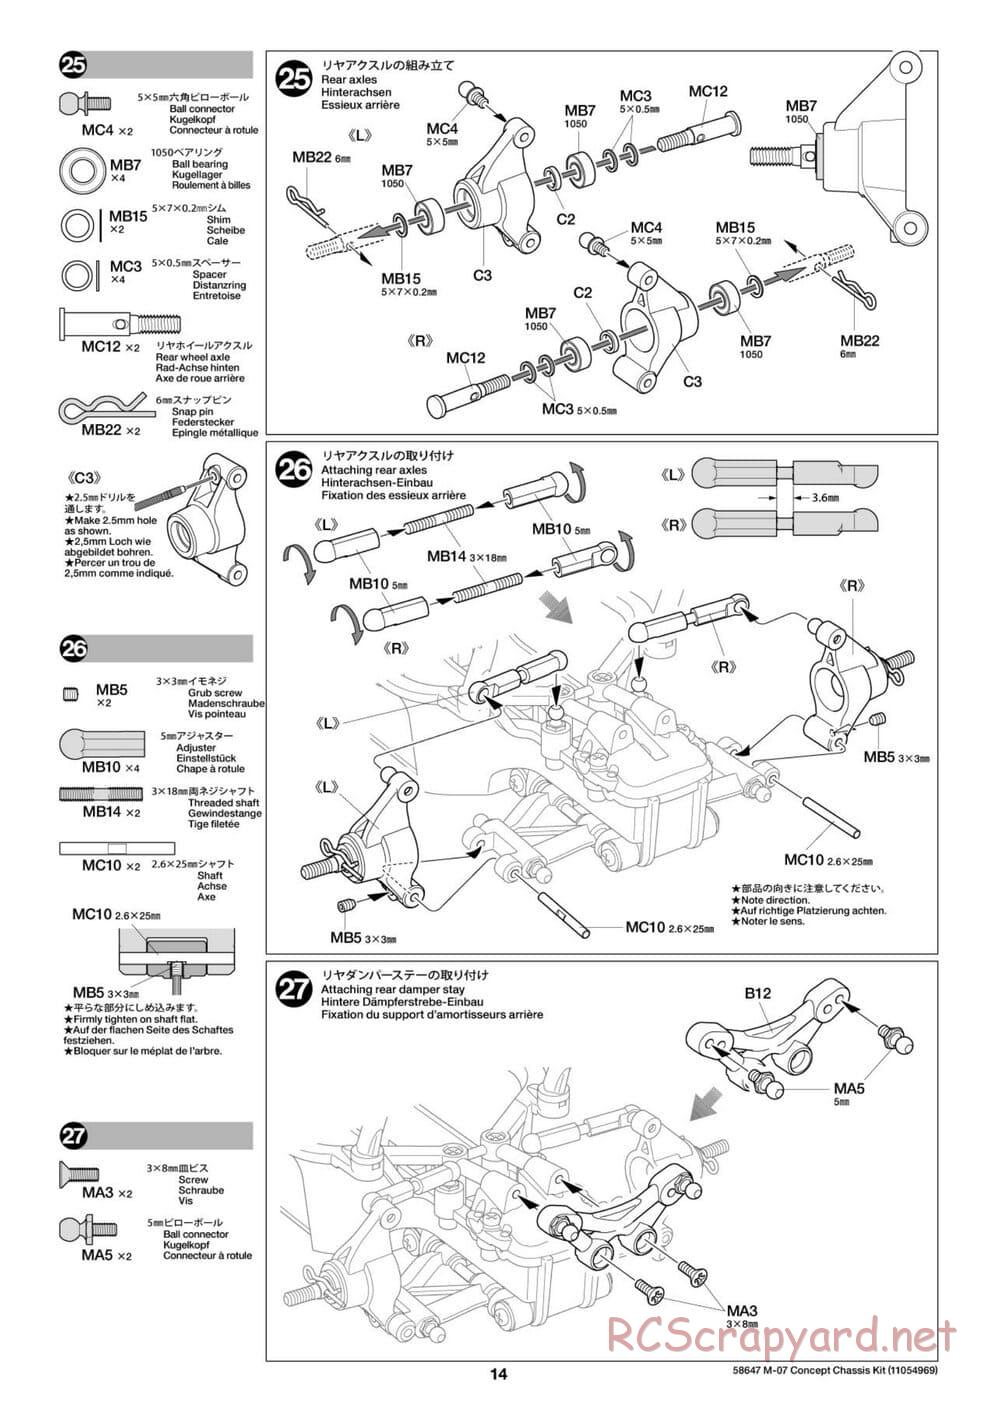 Tamiya - M-07 Concept Chassis - Manual - Page 14